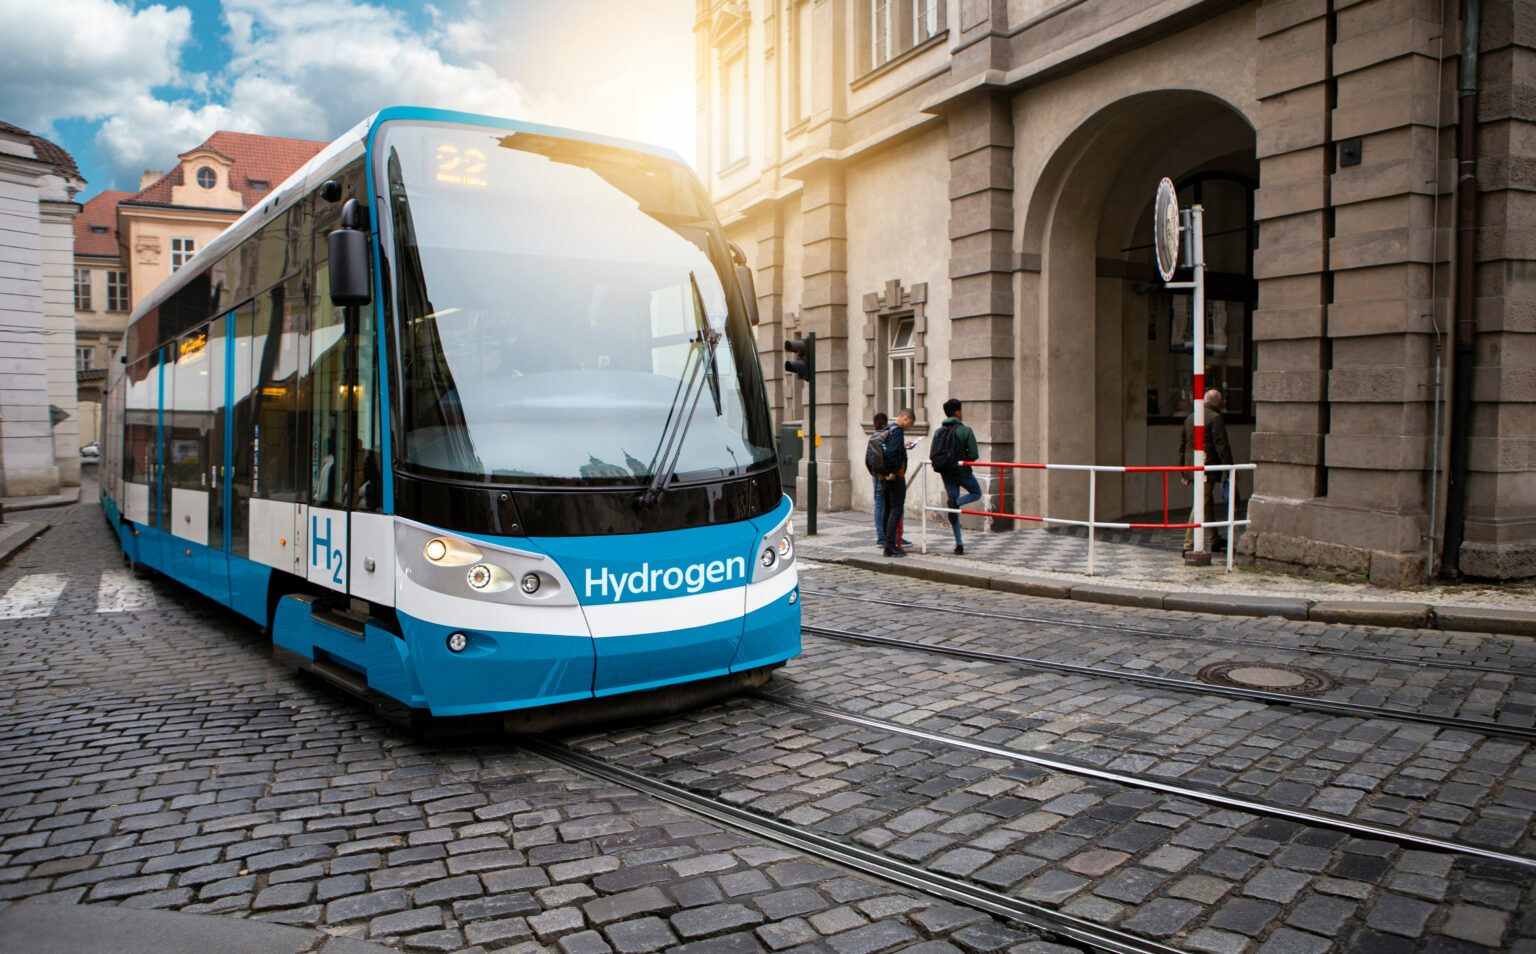 A hydrogen fuel cell tram on a city street